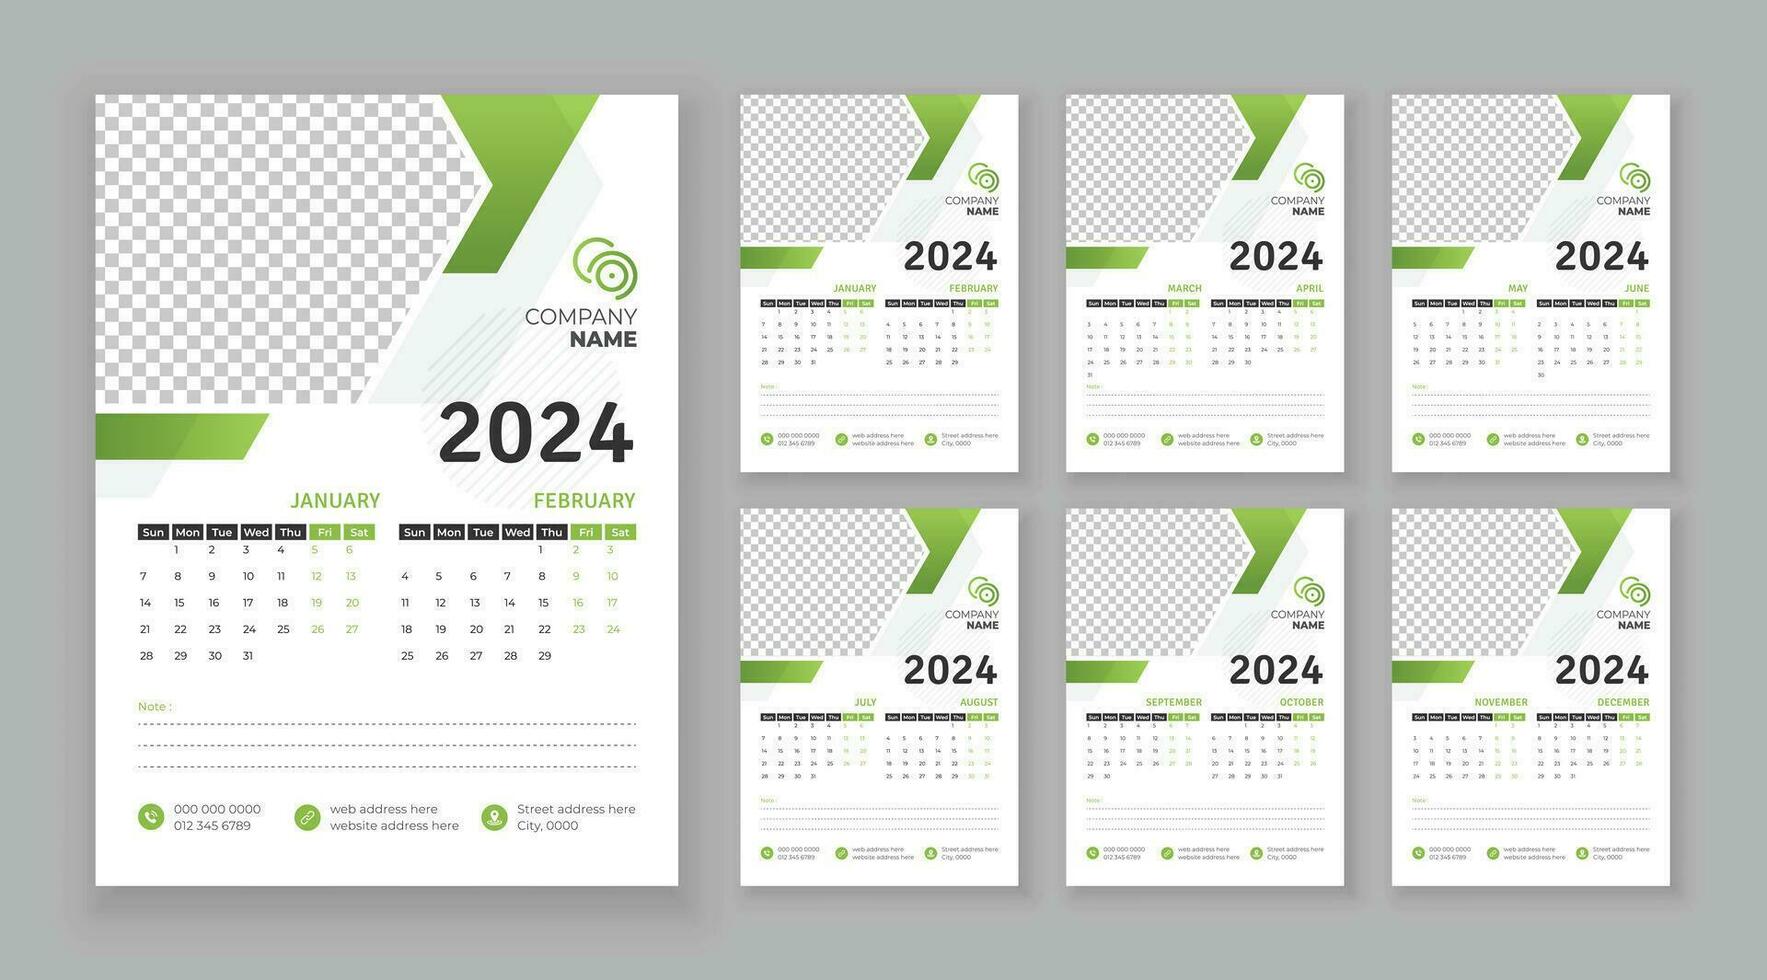 vector pared calendario 2024, pared calendario 2024, empresa calendario plantilla, semana comienzo domingo, pared calendario en un minimalista estilo